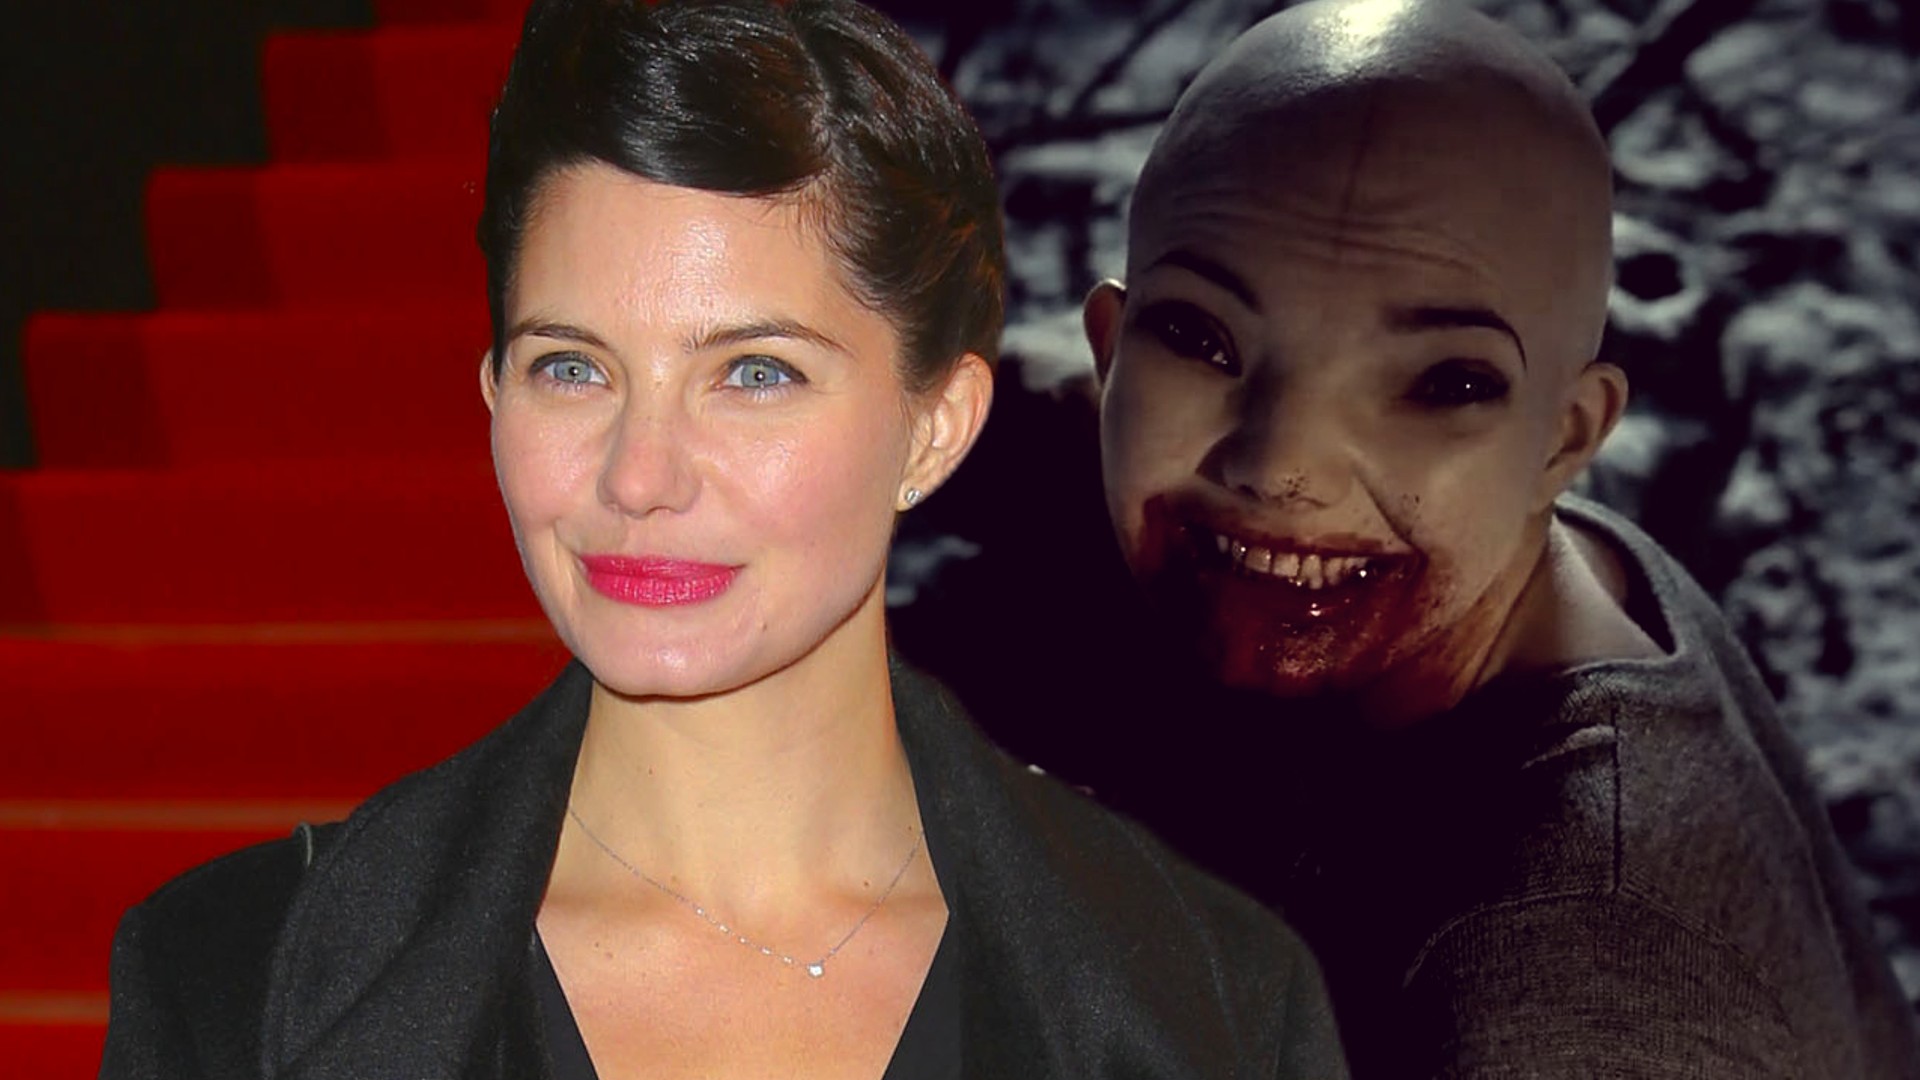 5 Horror Movie Stars Who Look Shockingly Good Beneath Terrifying Makeup